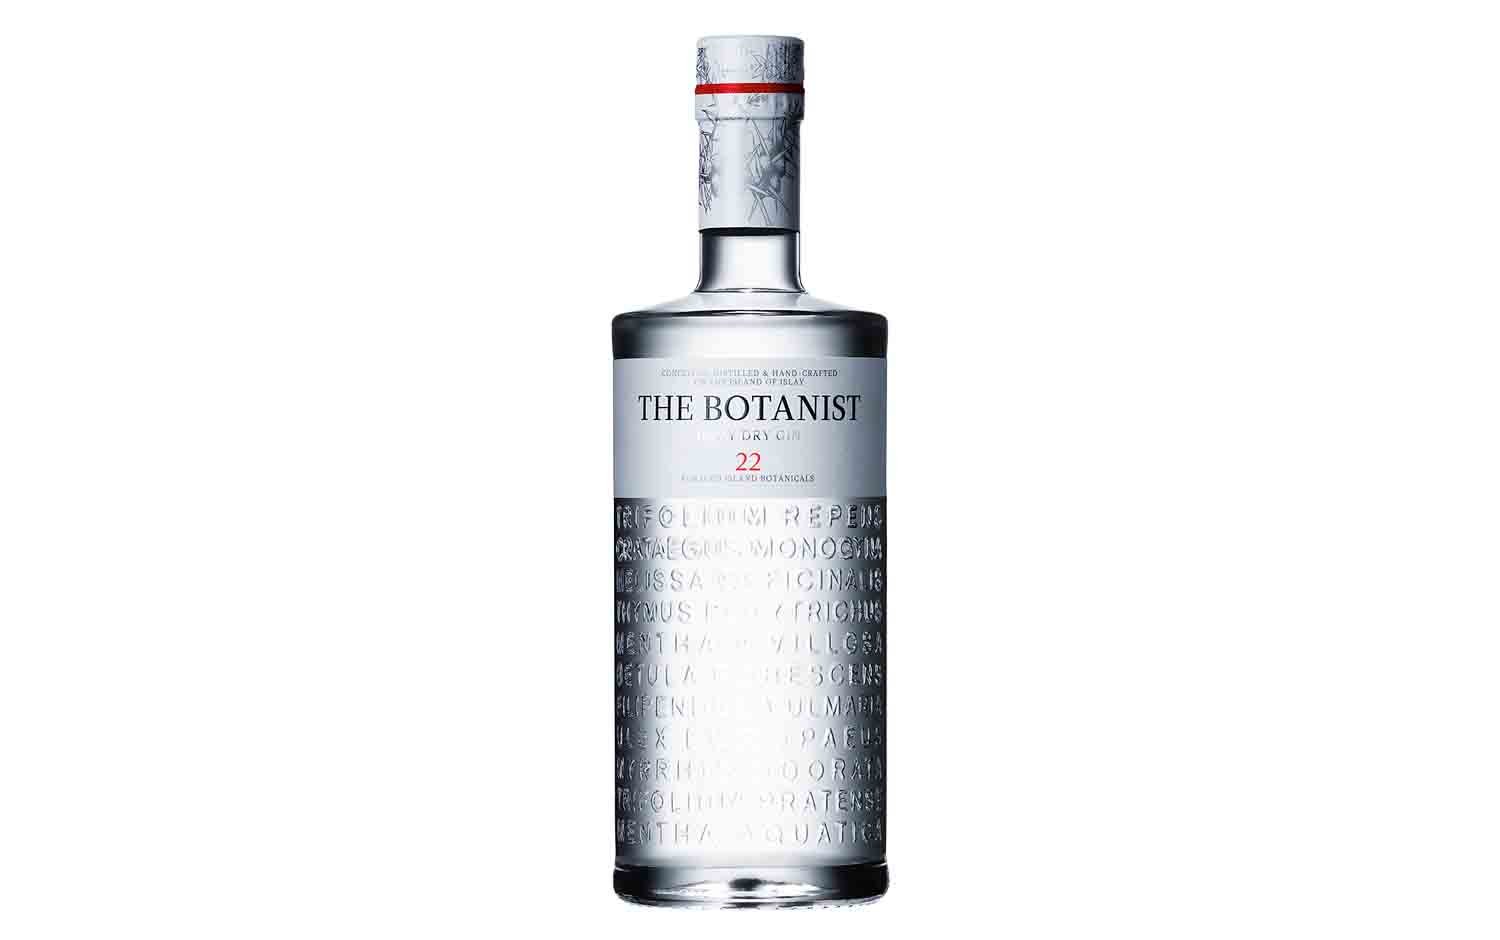 6 botanist islay dry gin on white